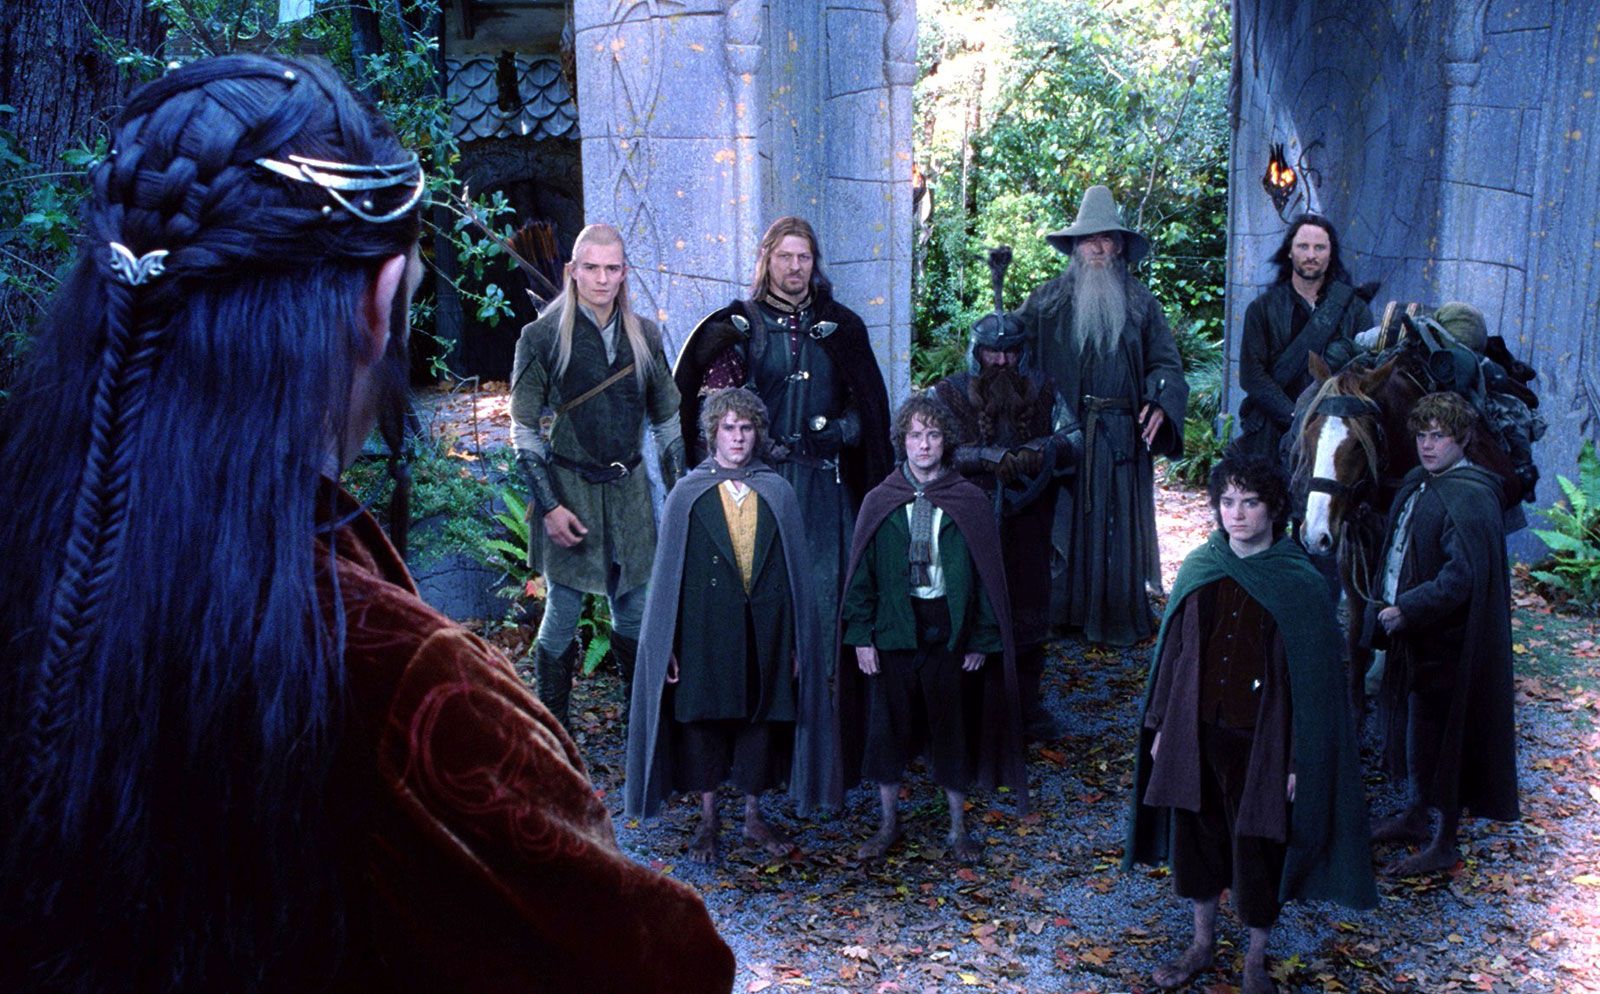 The Fellowship leaves Rivendell